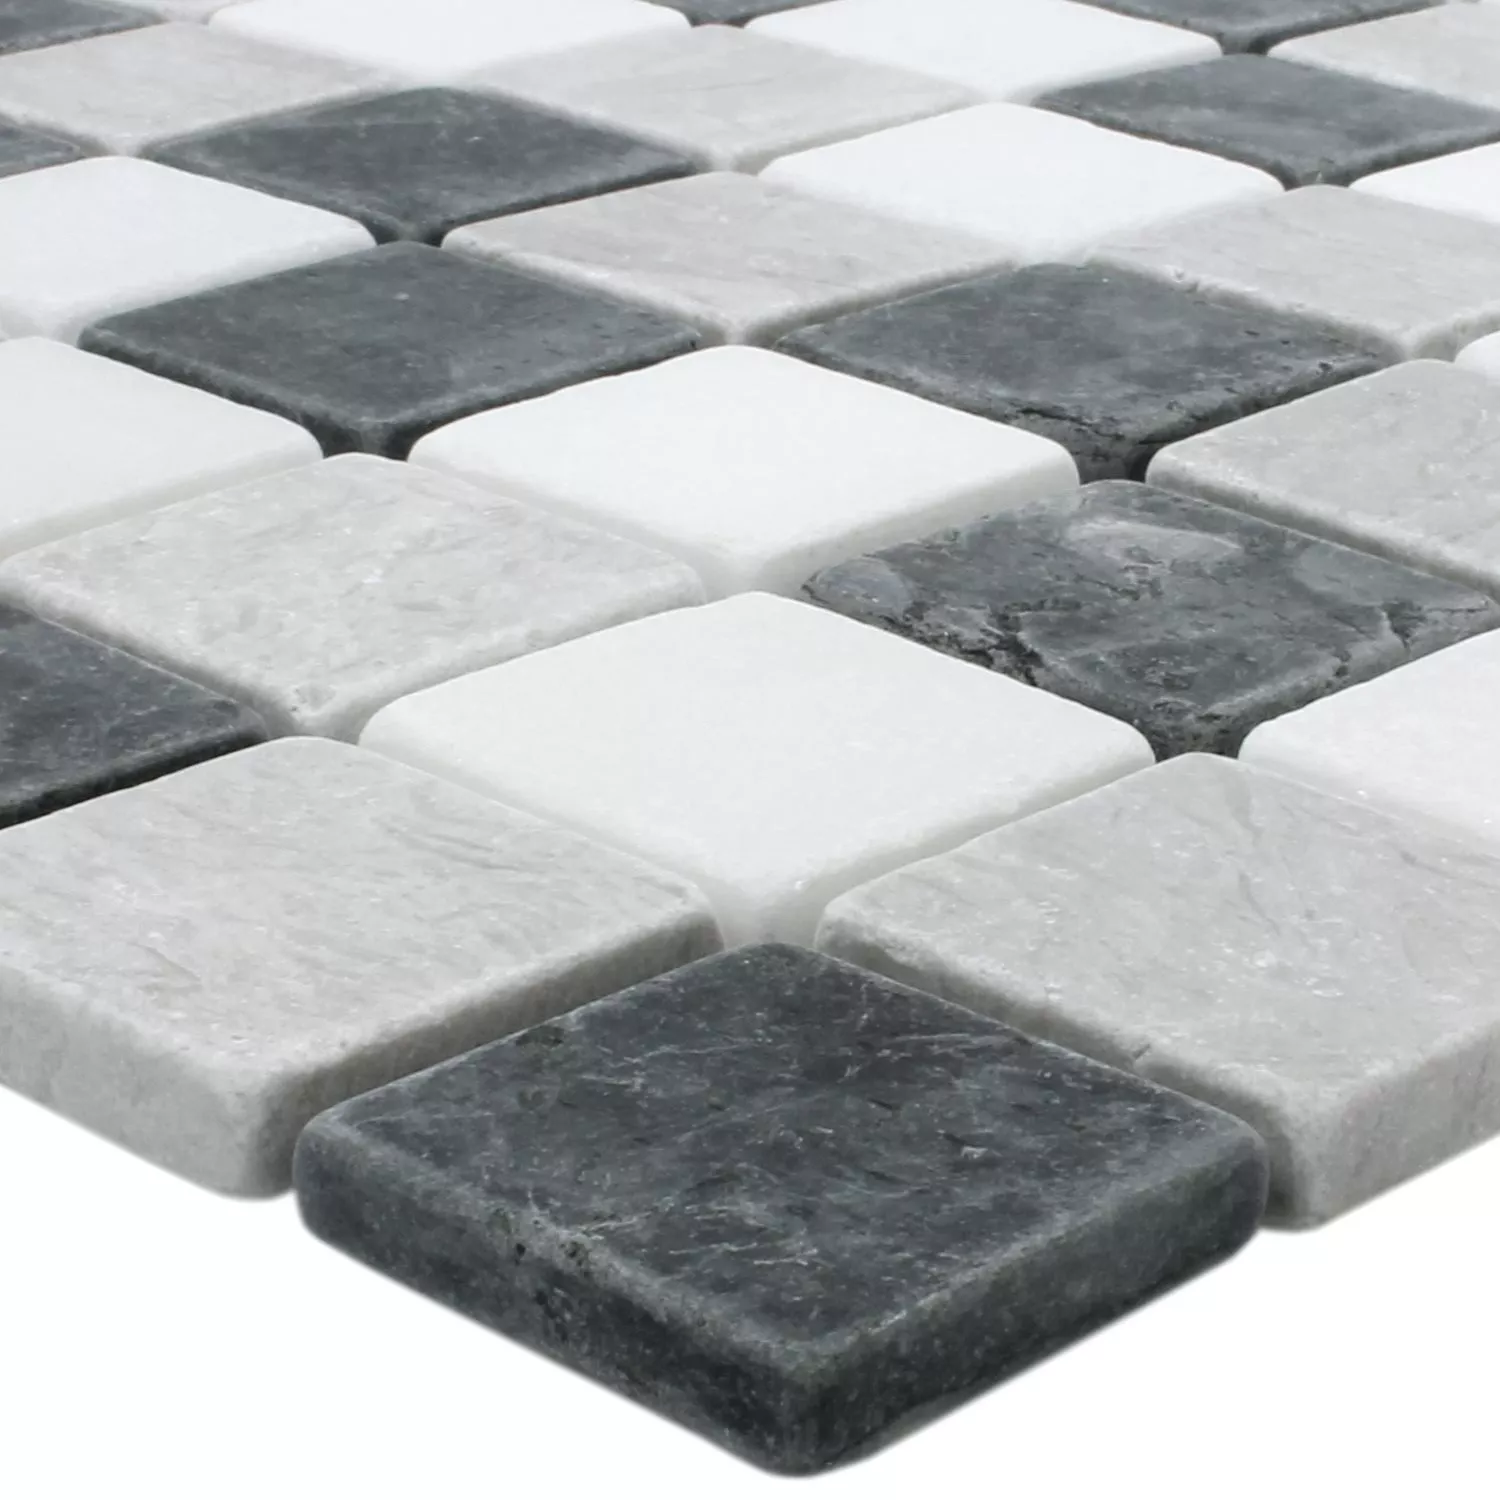 Sample Mosaic Tiles Neutro Botticino Grey Mix